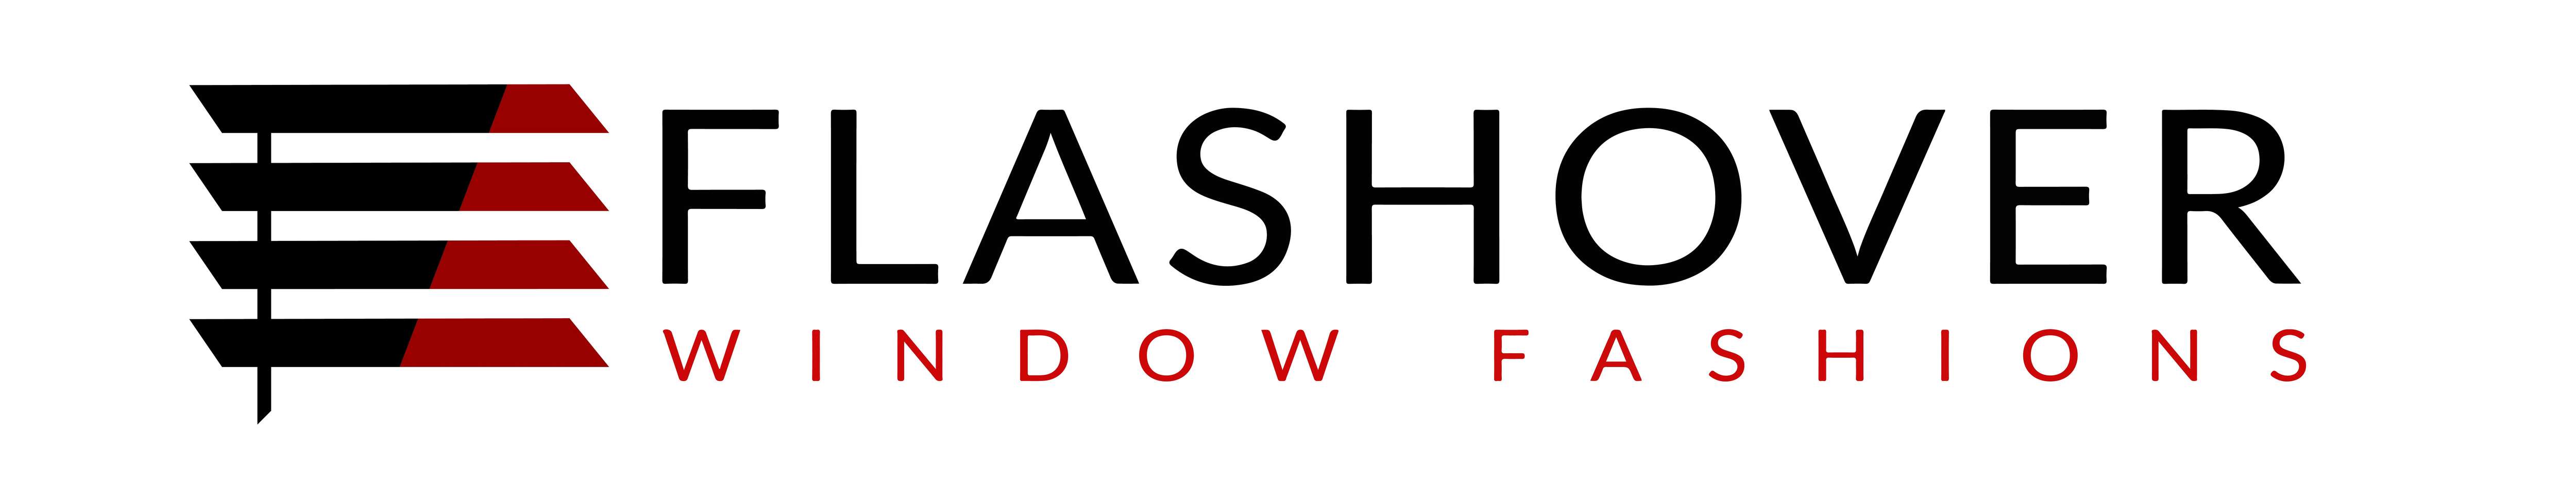 Flashover Windows